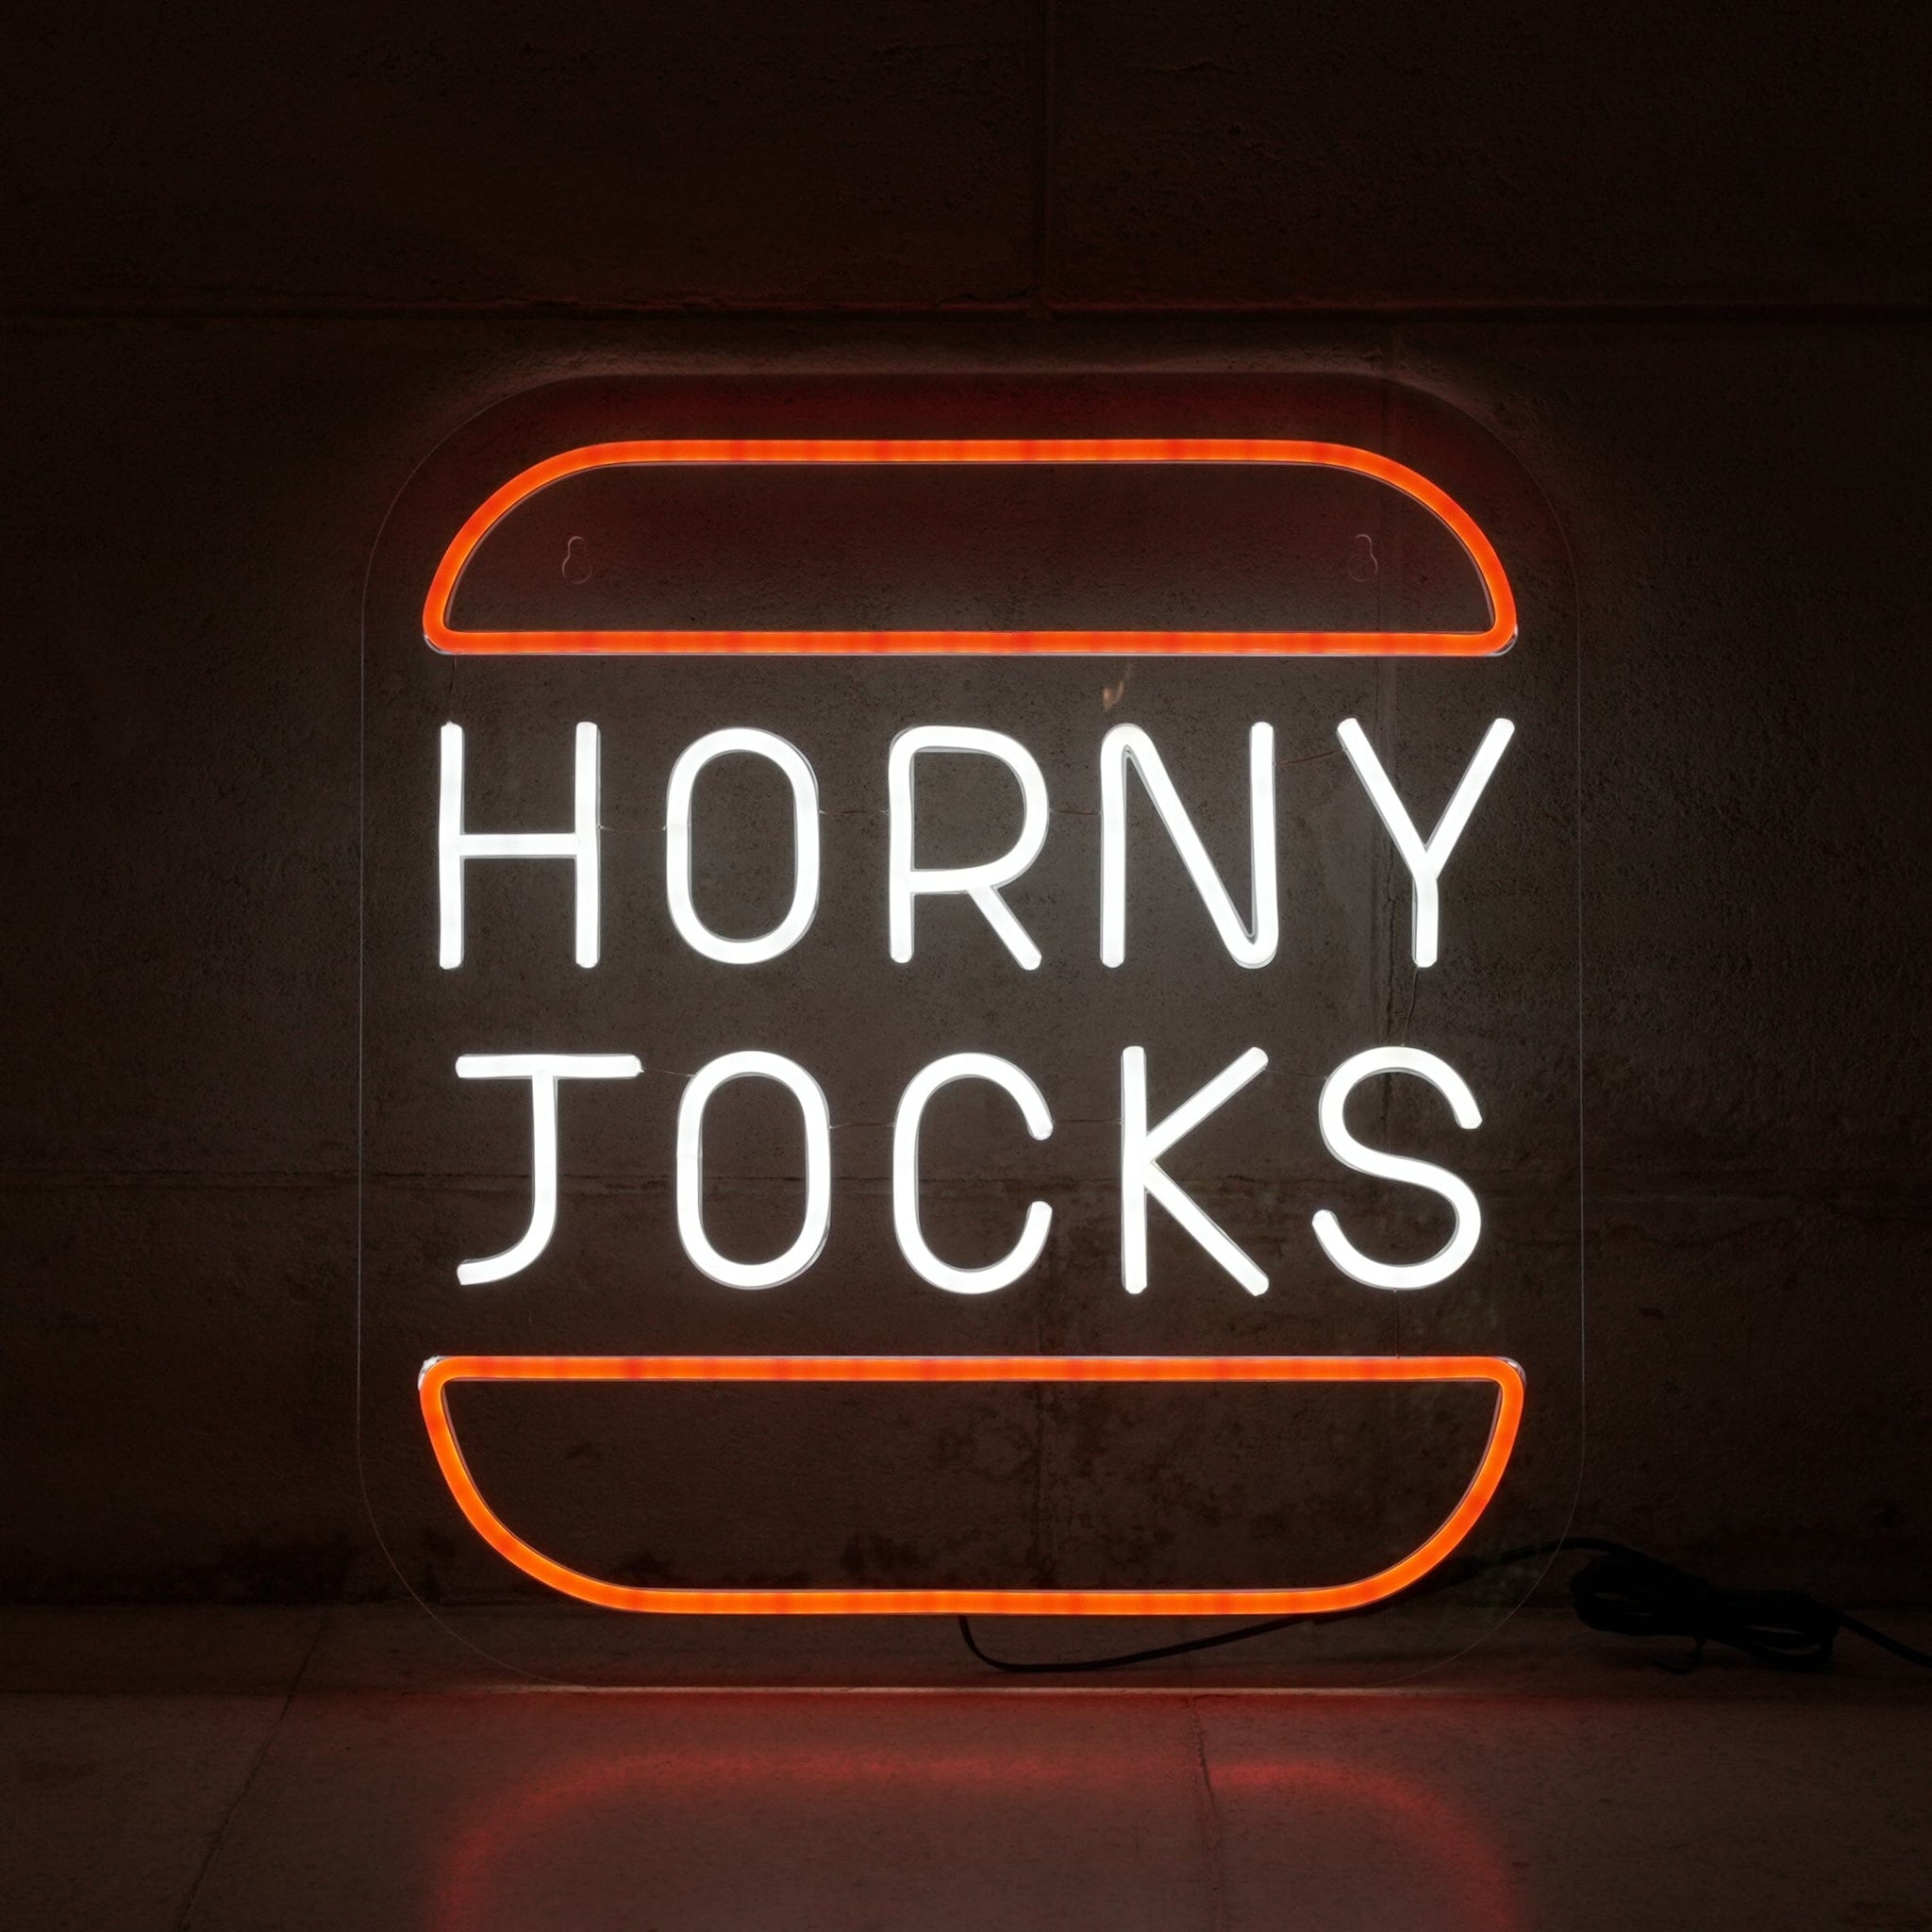 Horny Jocks Limited Edition Neon Paul Yore - Third Drawer Down